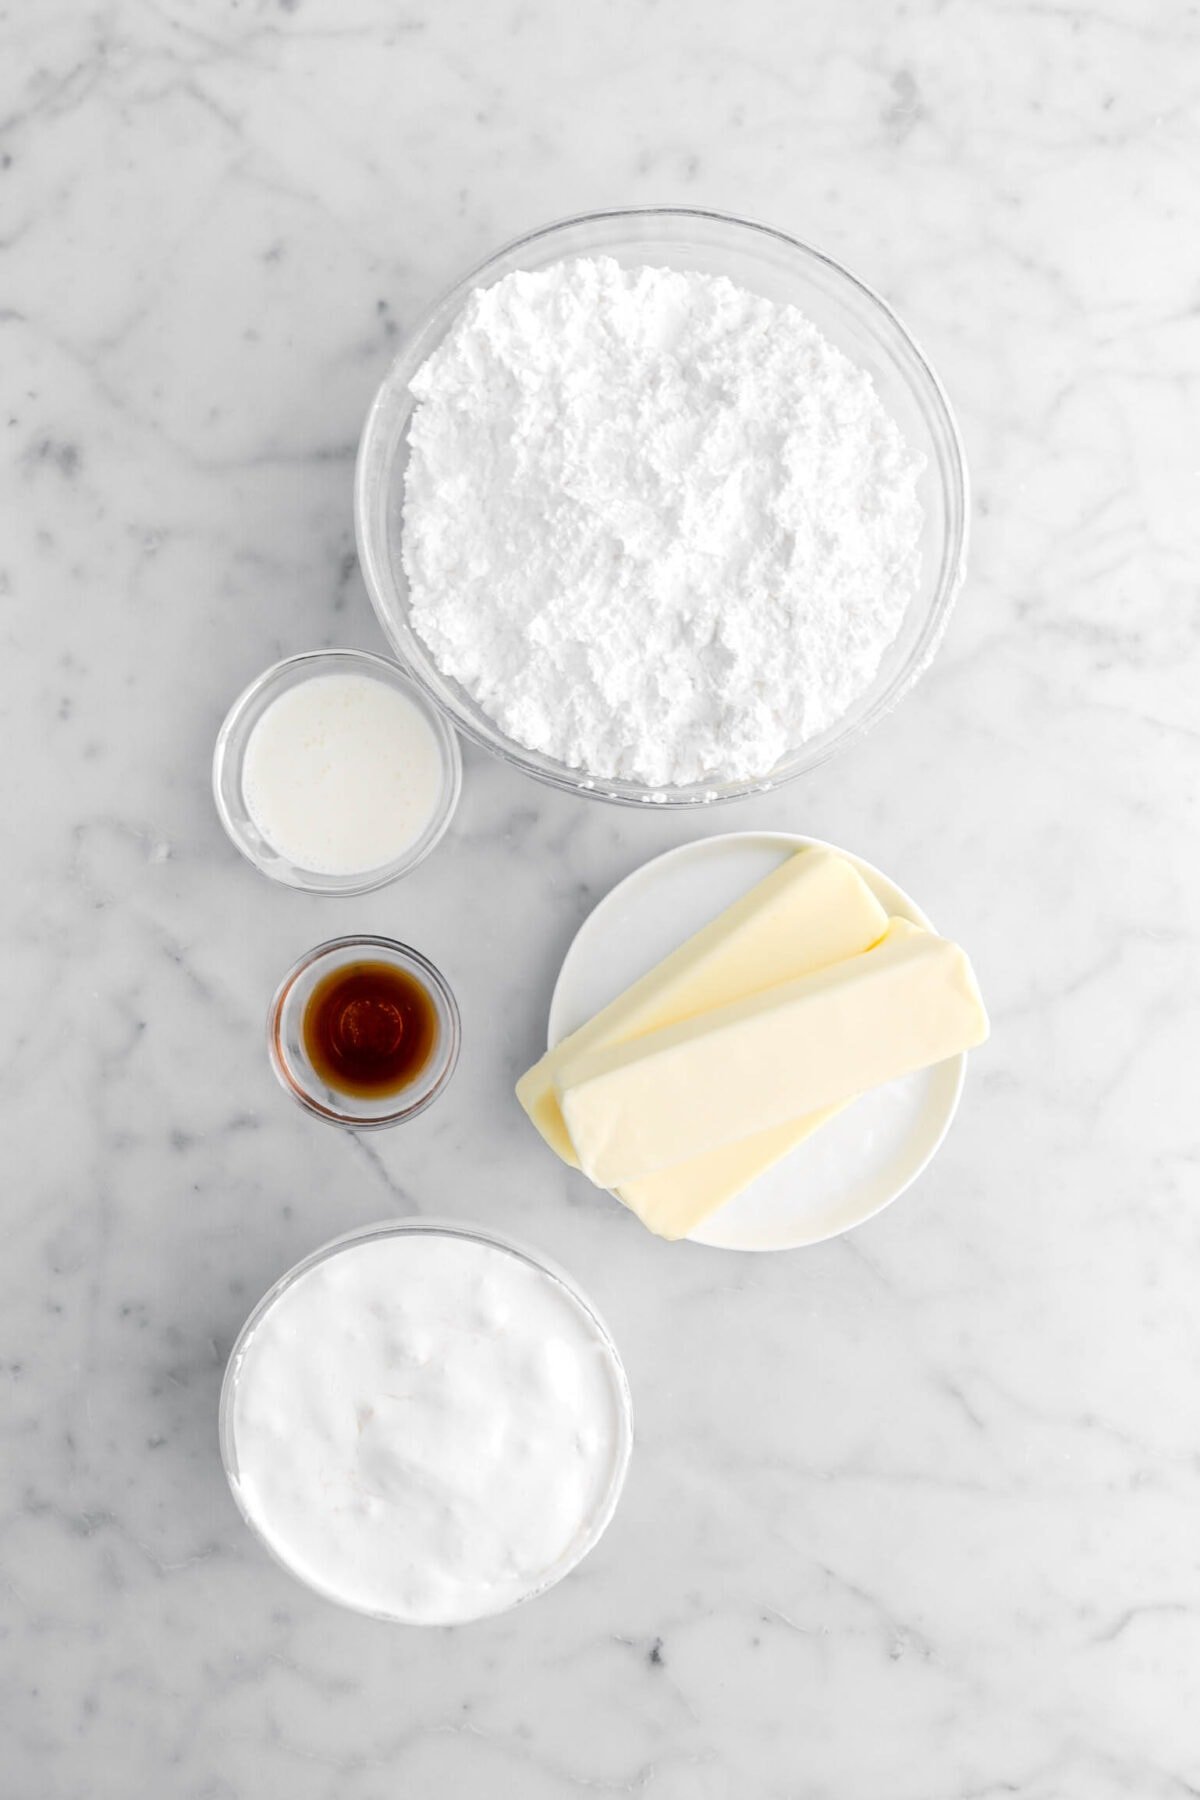 powdered sugar, milk, vanilla, butter, and marshmallow fluff on marble surface.